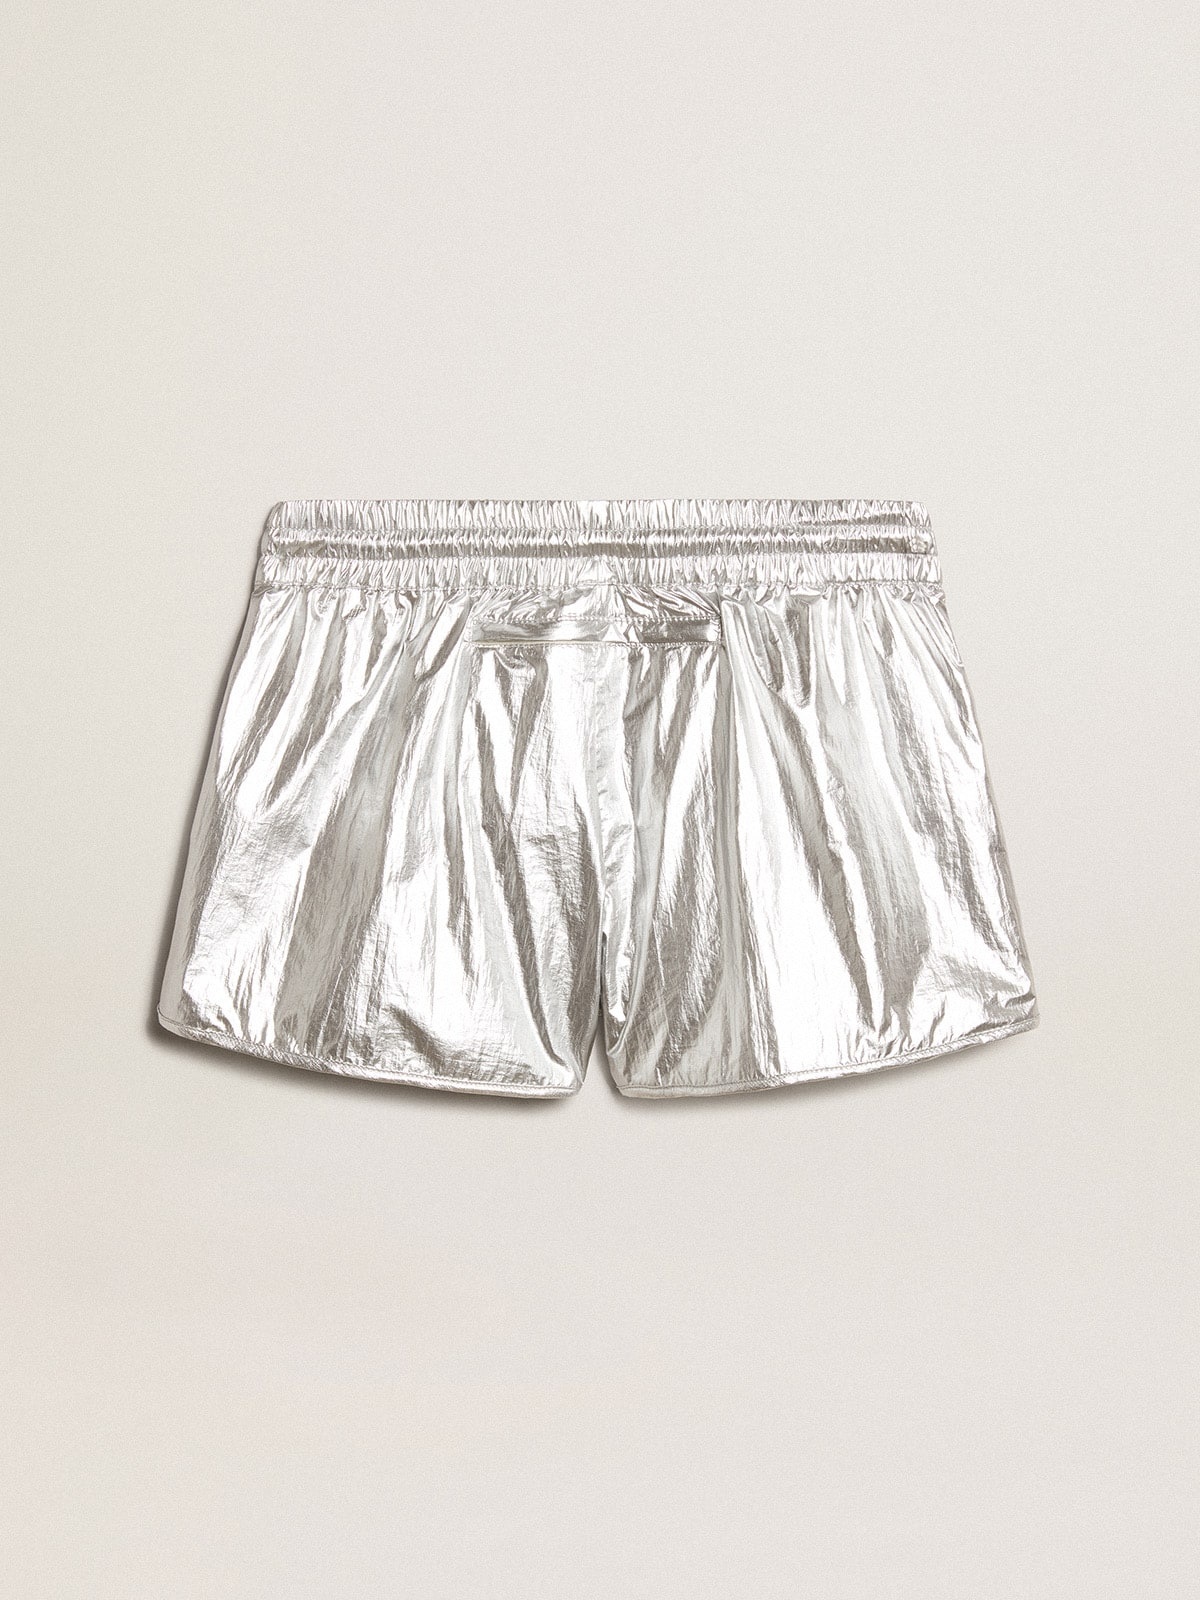 Women’s running shorts in silver fabric - 6